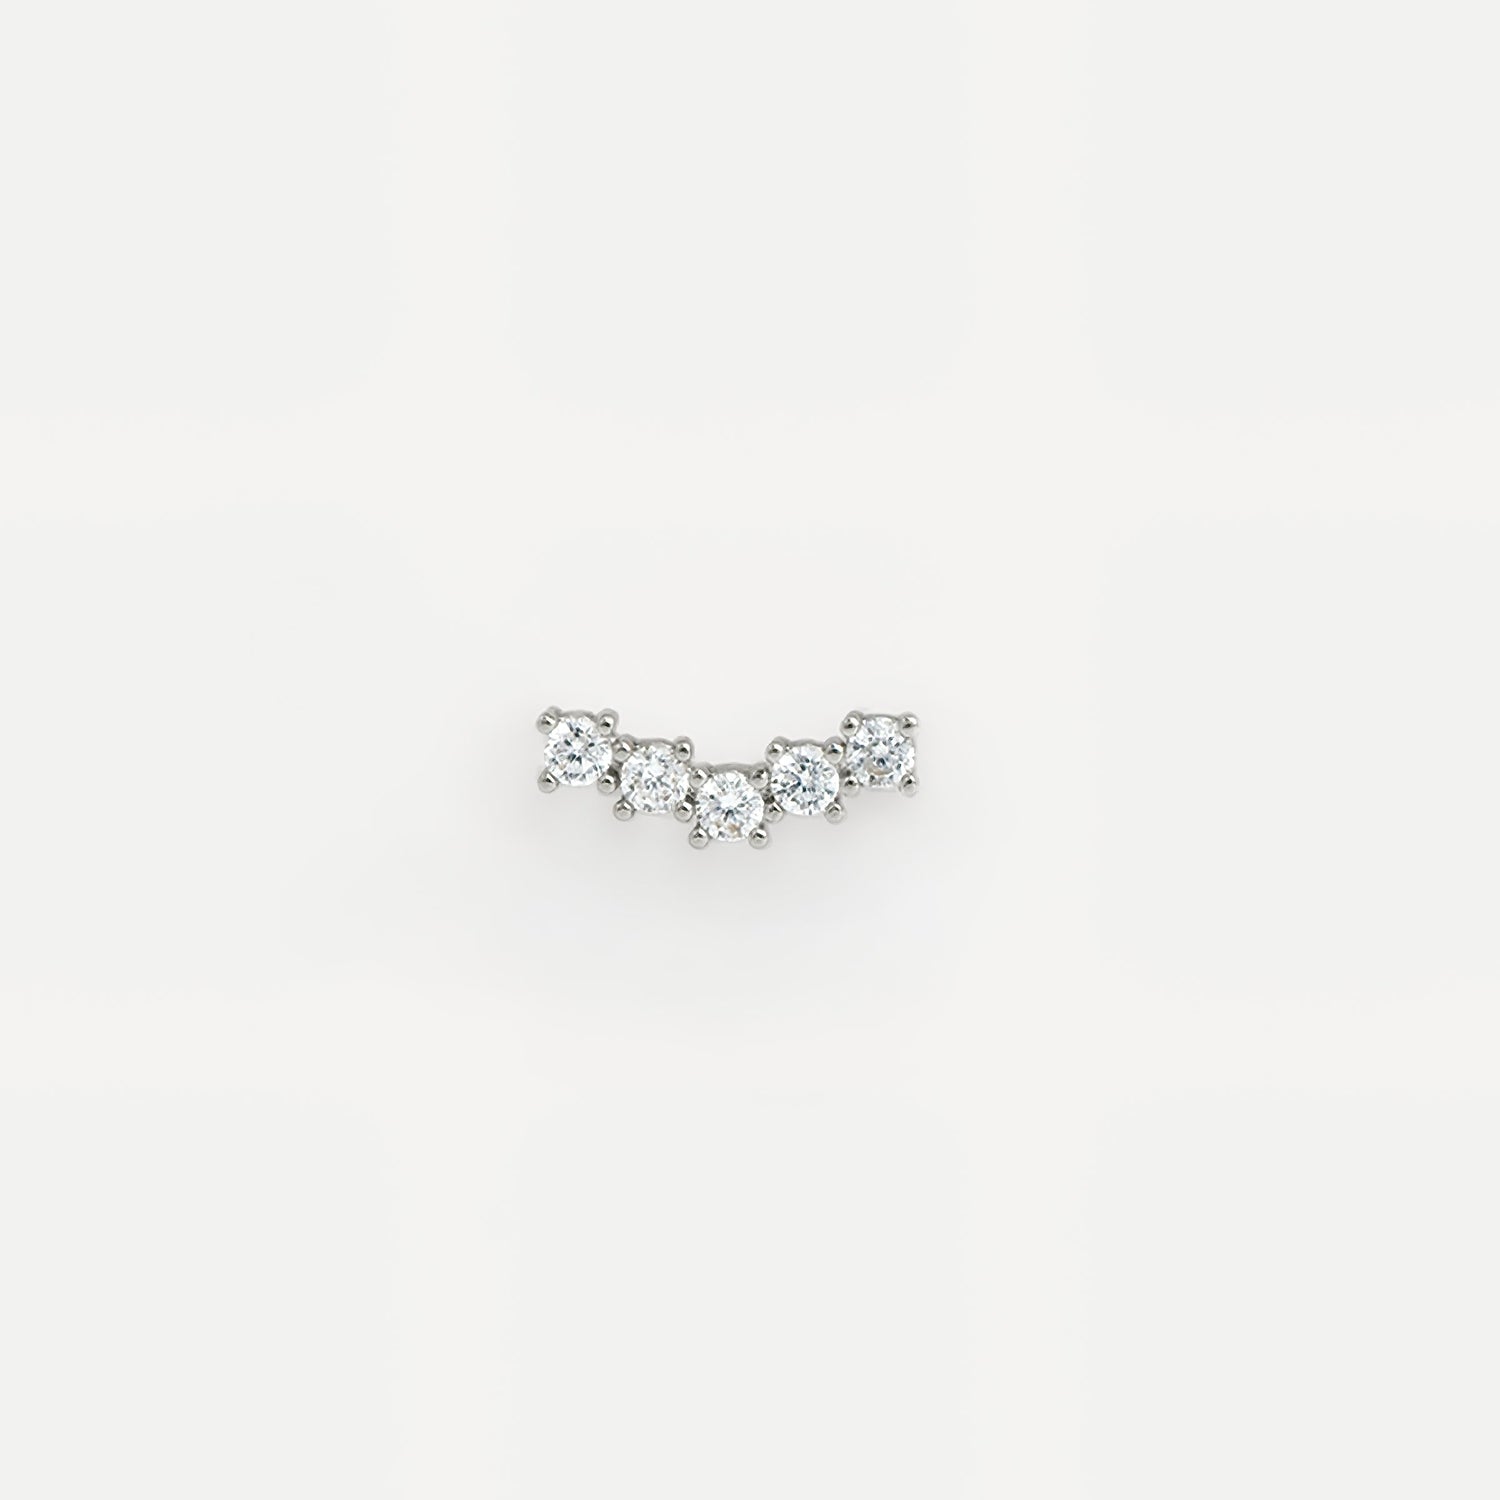 Anastasia piercing - silver